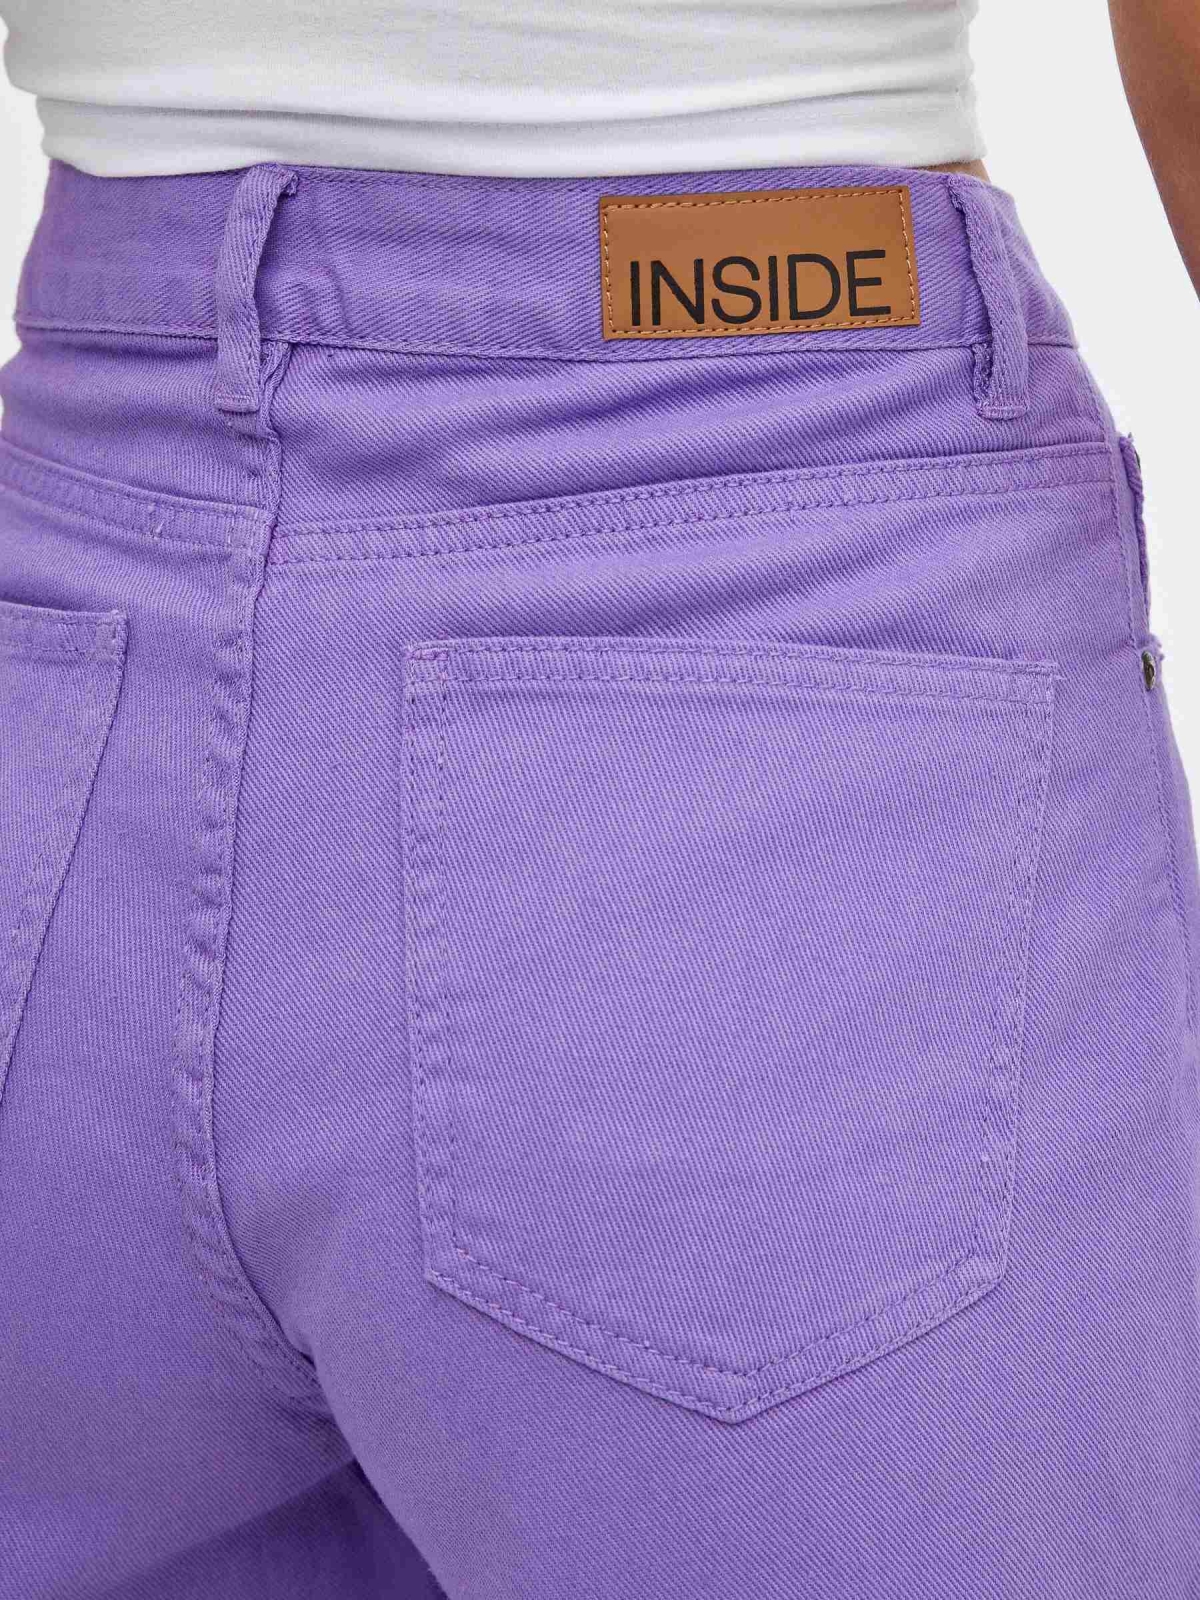 Vintage denim shorts lilac detail view